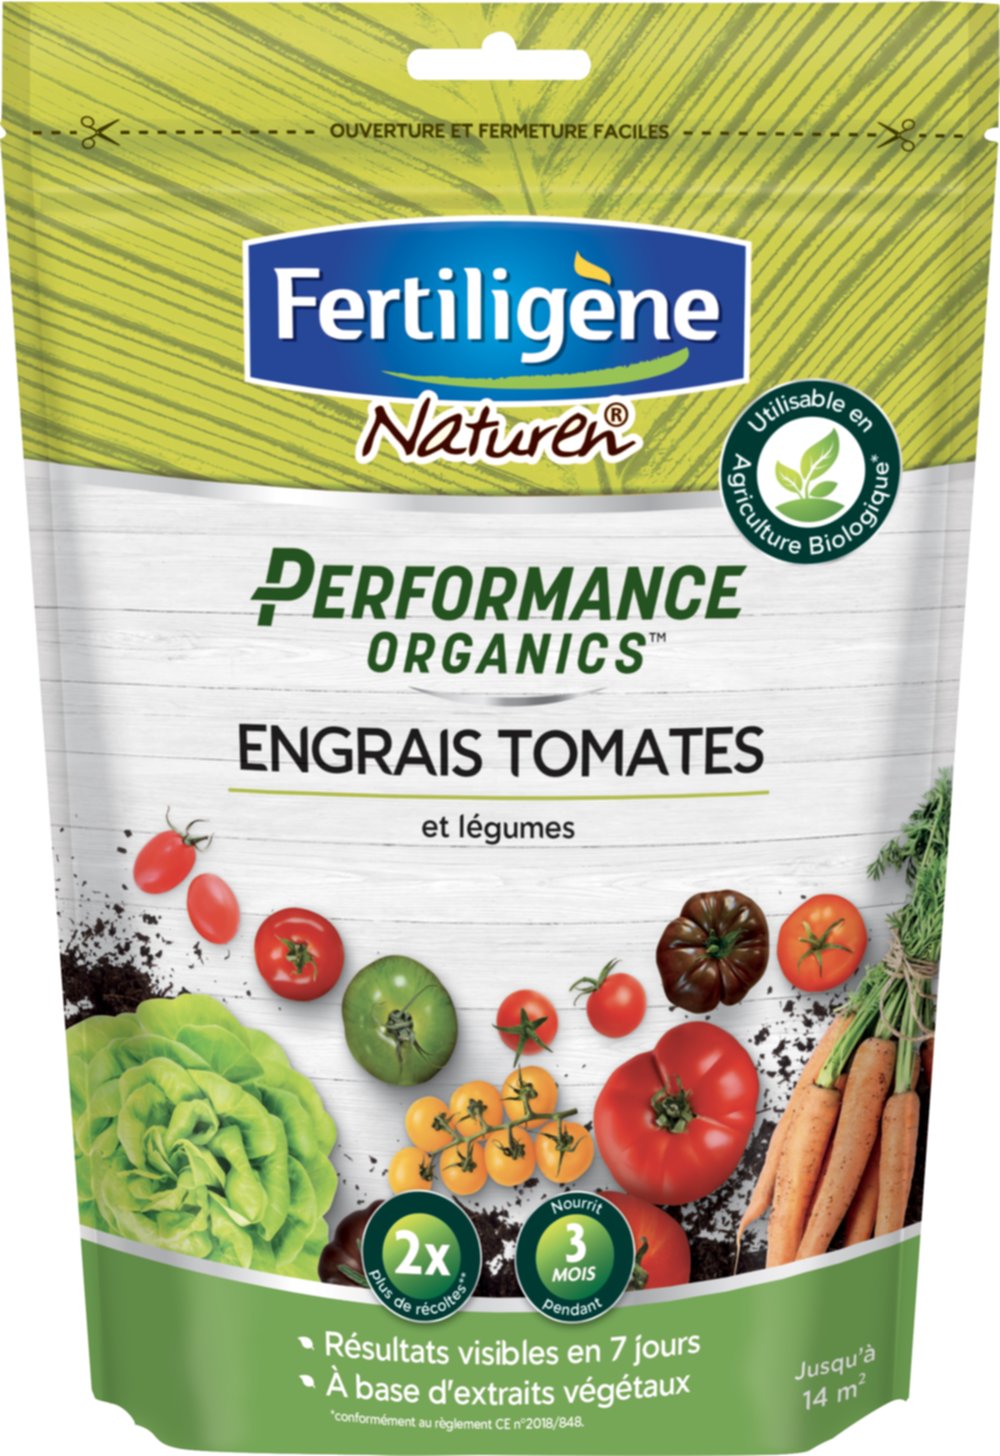 Performance organics Engrais tomates et légumes uab 700g